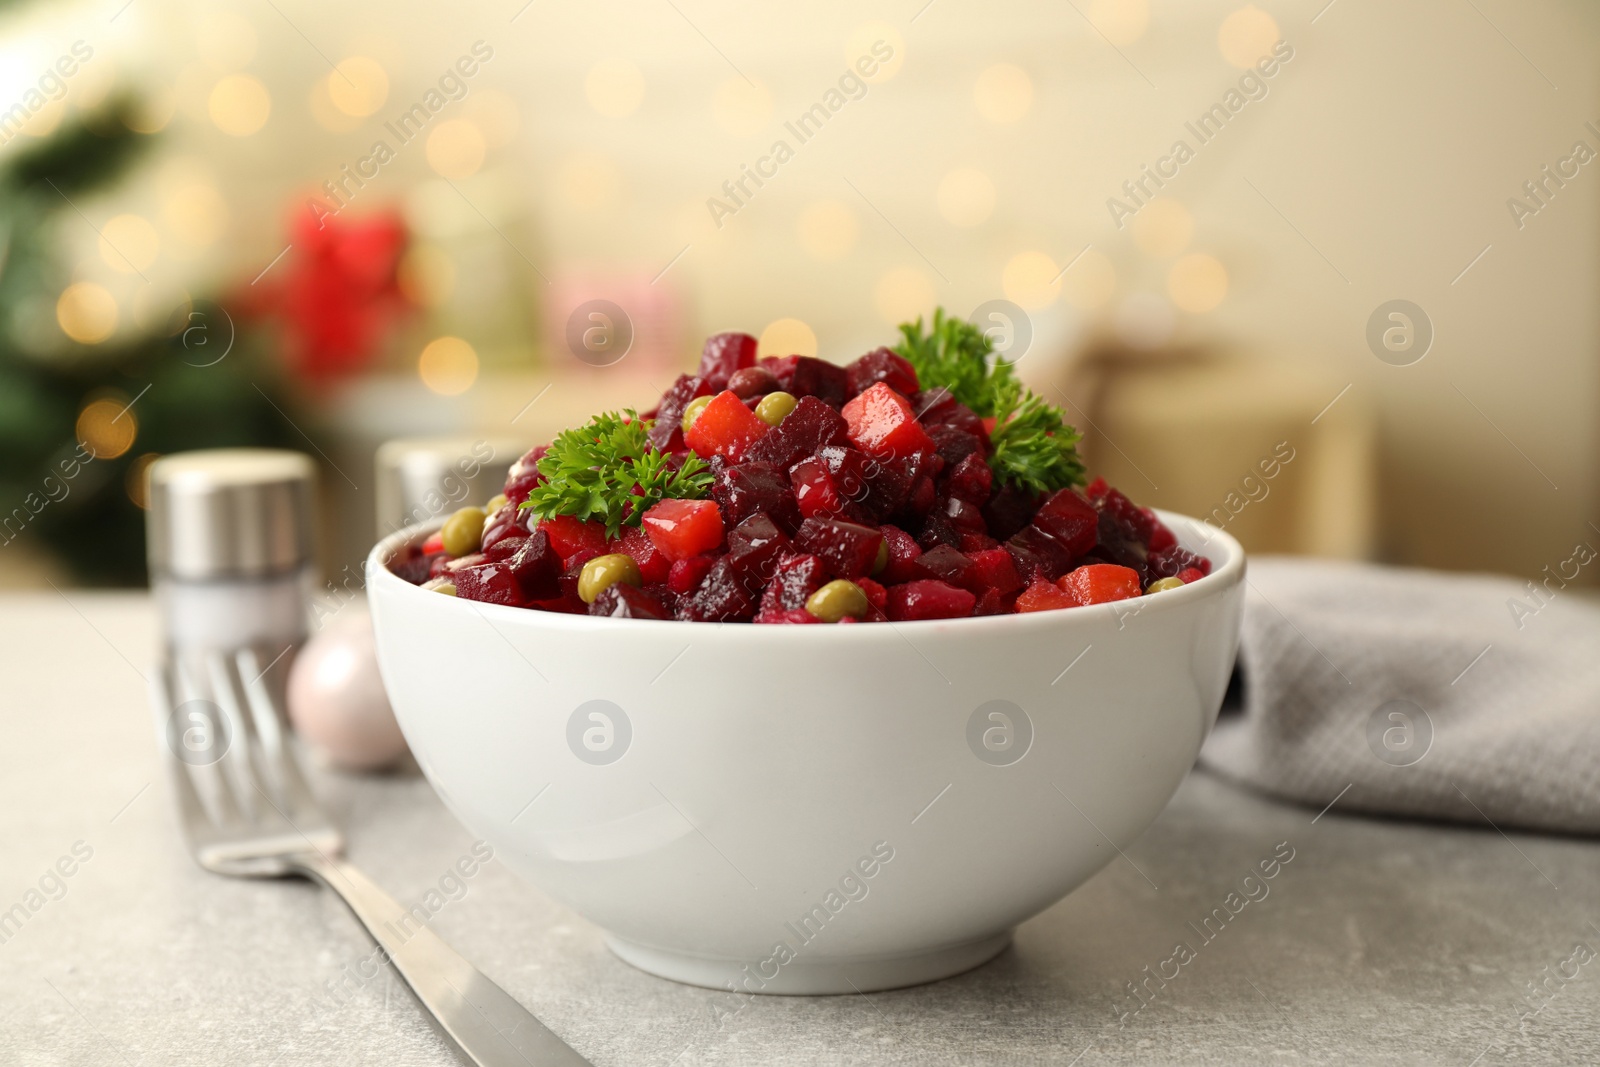 Photo of Traditional Russian salad vinaigrette served on light table